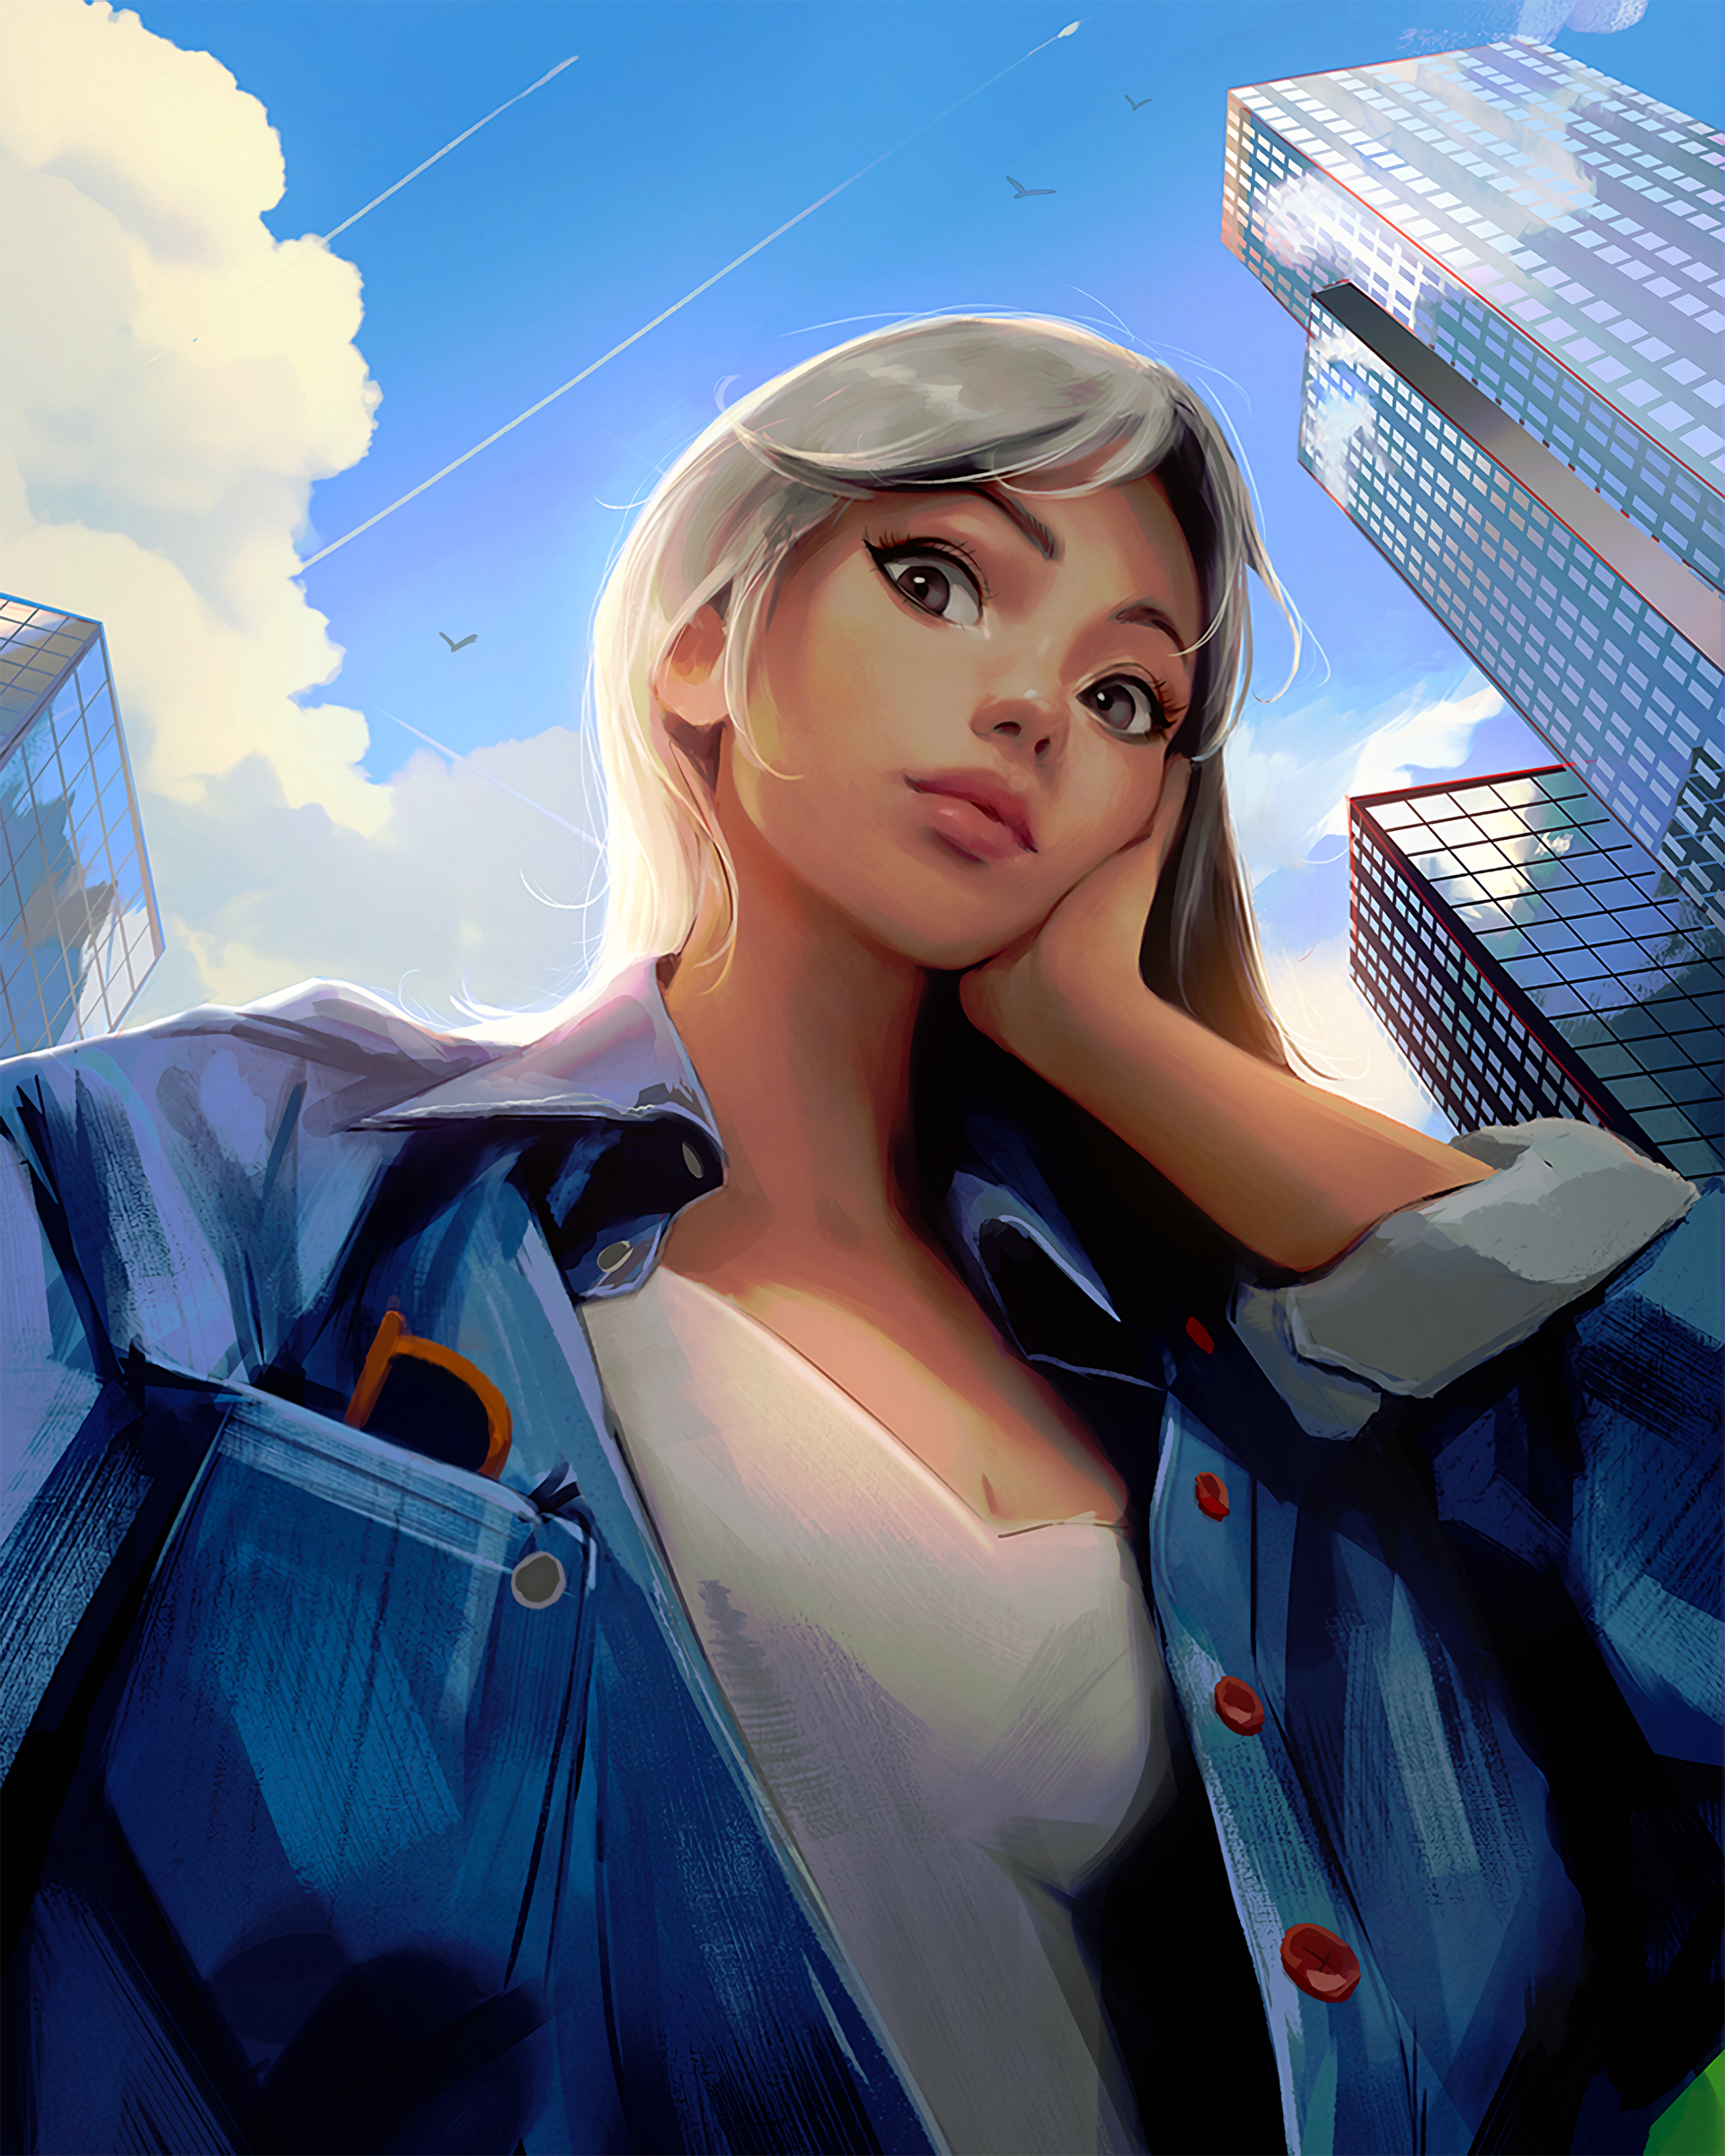 Women Digital Art Perspective Denim Jacket Blonde Looking Below Looking At Viewer Skyscraper Vertica 1920x2400